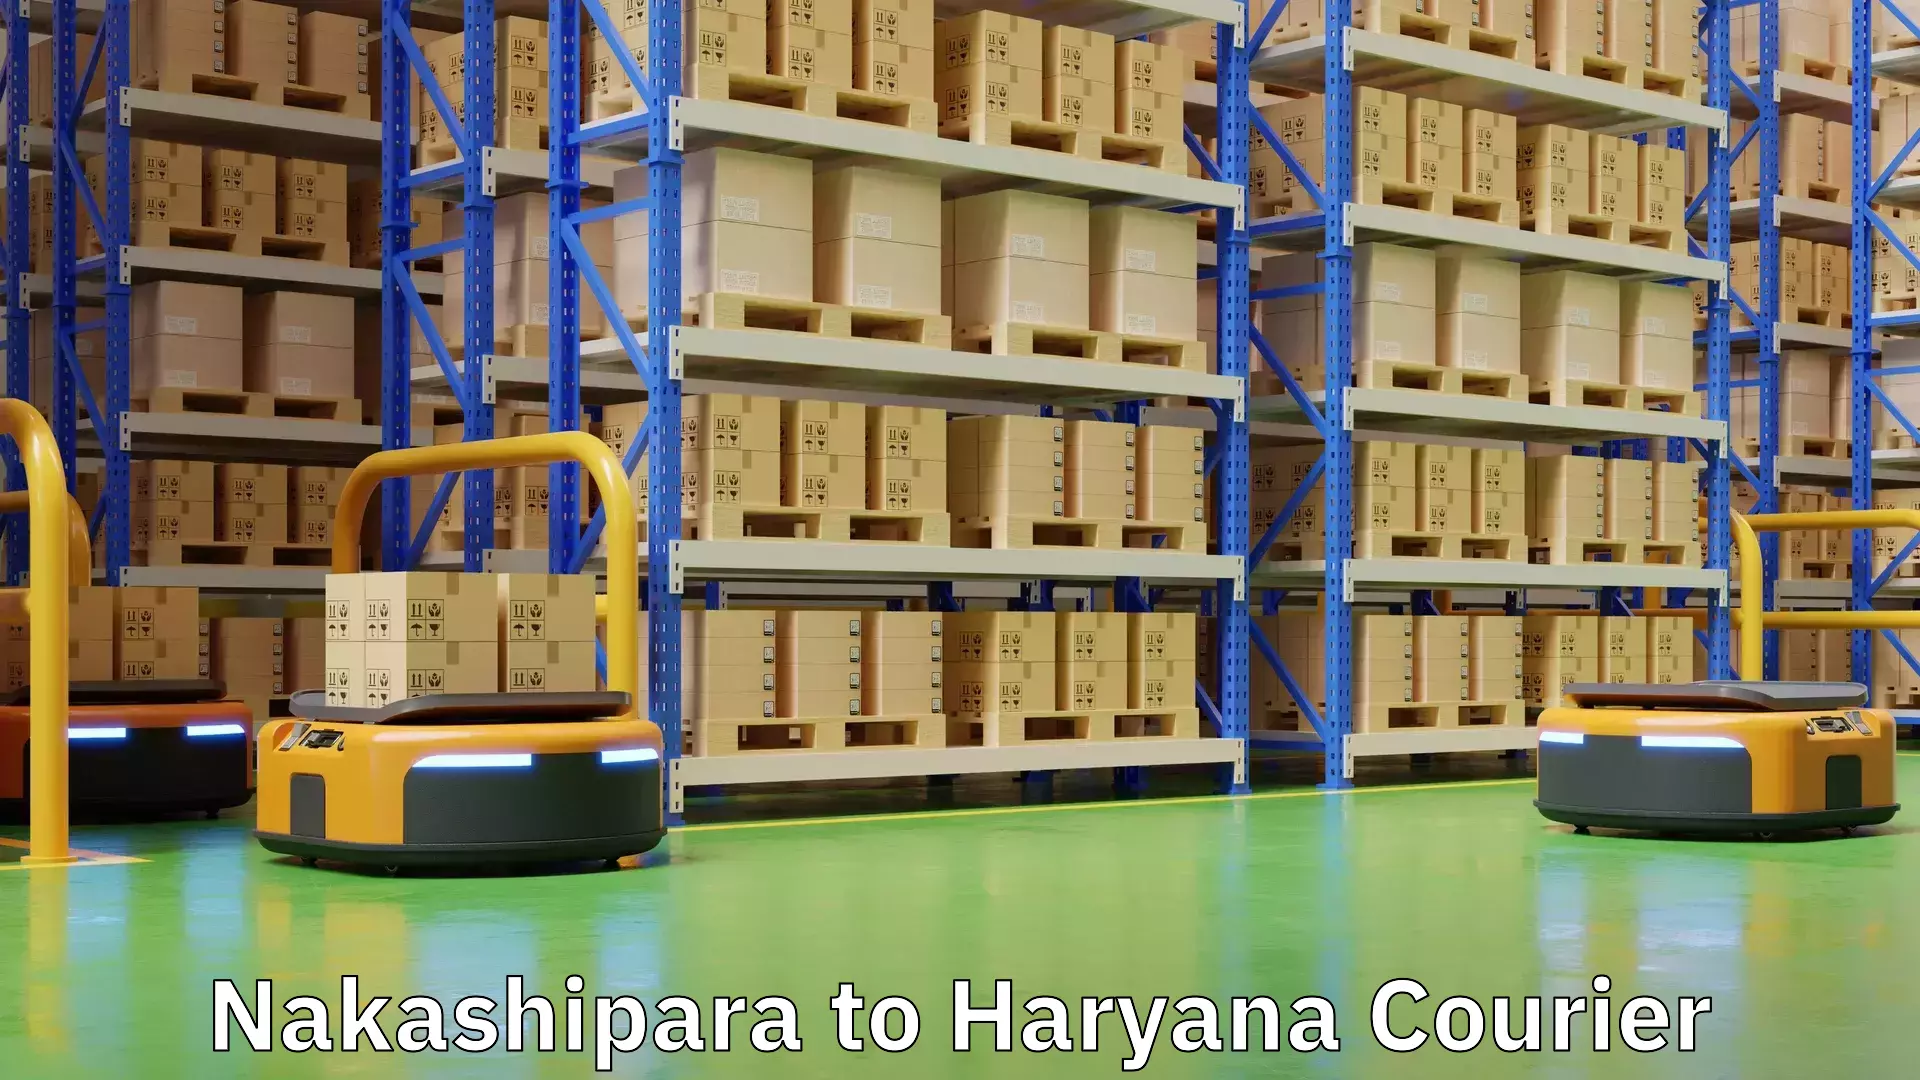 Bulk shipping discounts in Nakashipara to Haryana